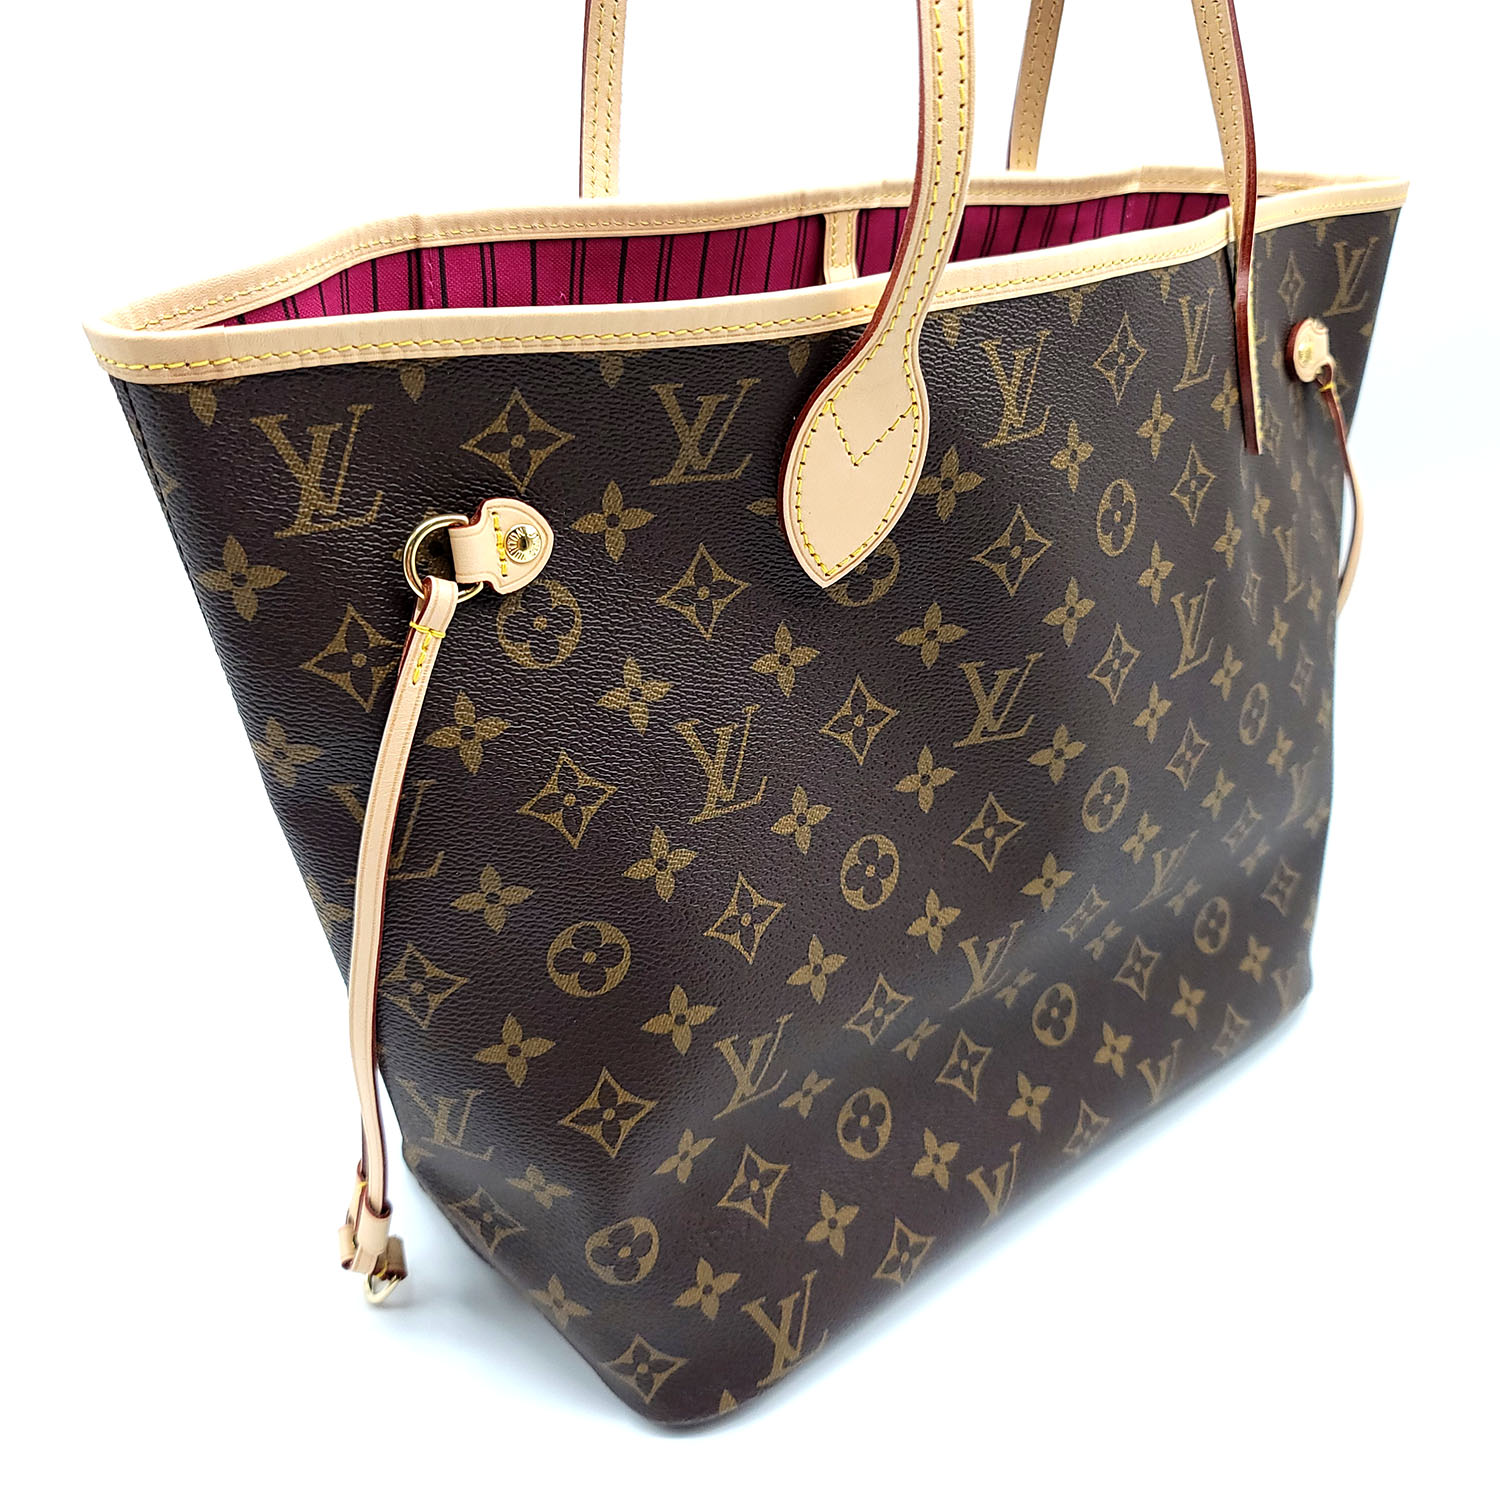 Shop Louis Vuitton NEVERFULL Louis Vuitton Neverfull MM M22921 (M22921 ) by  sweetピヨ